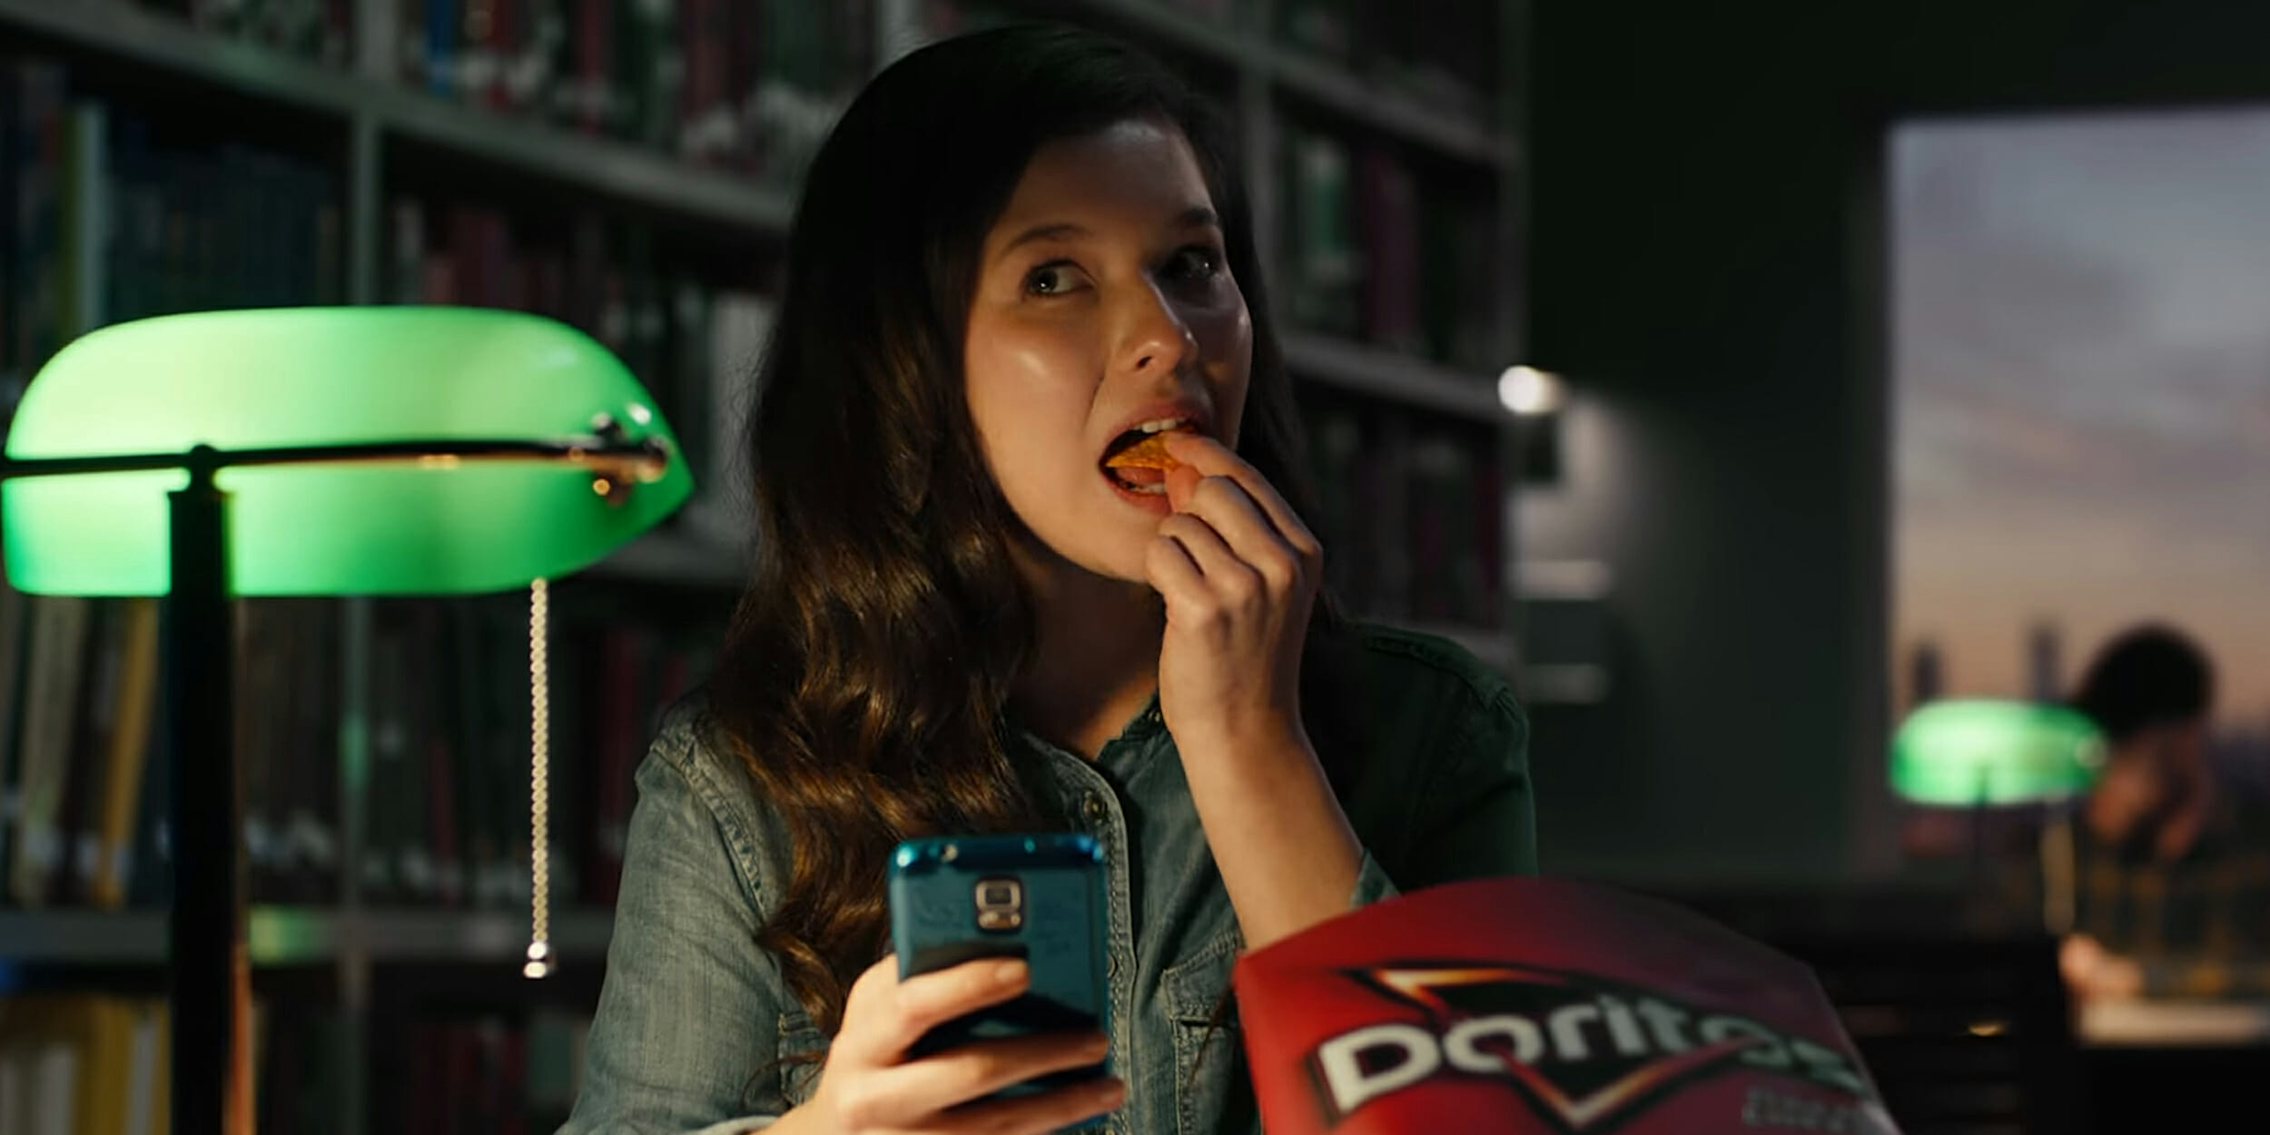 Woman eating Doritos in a library